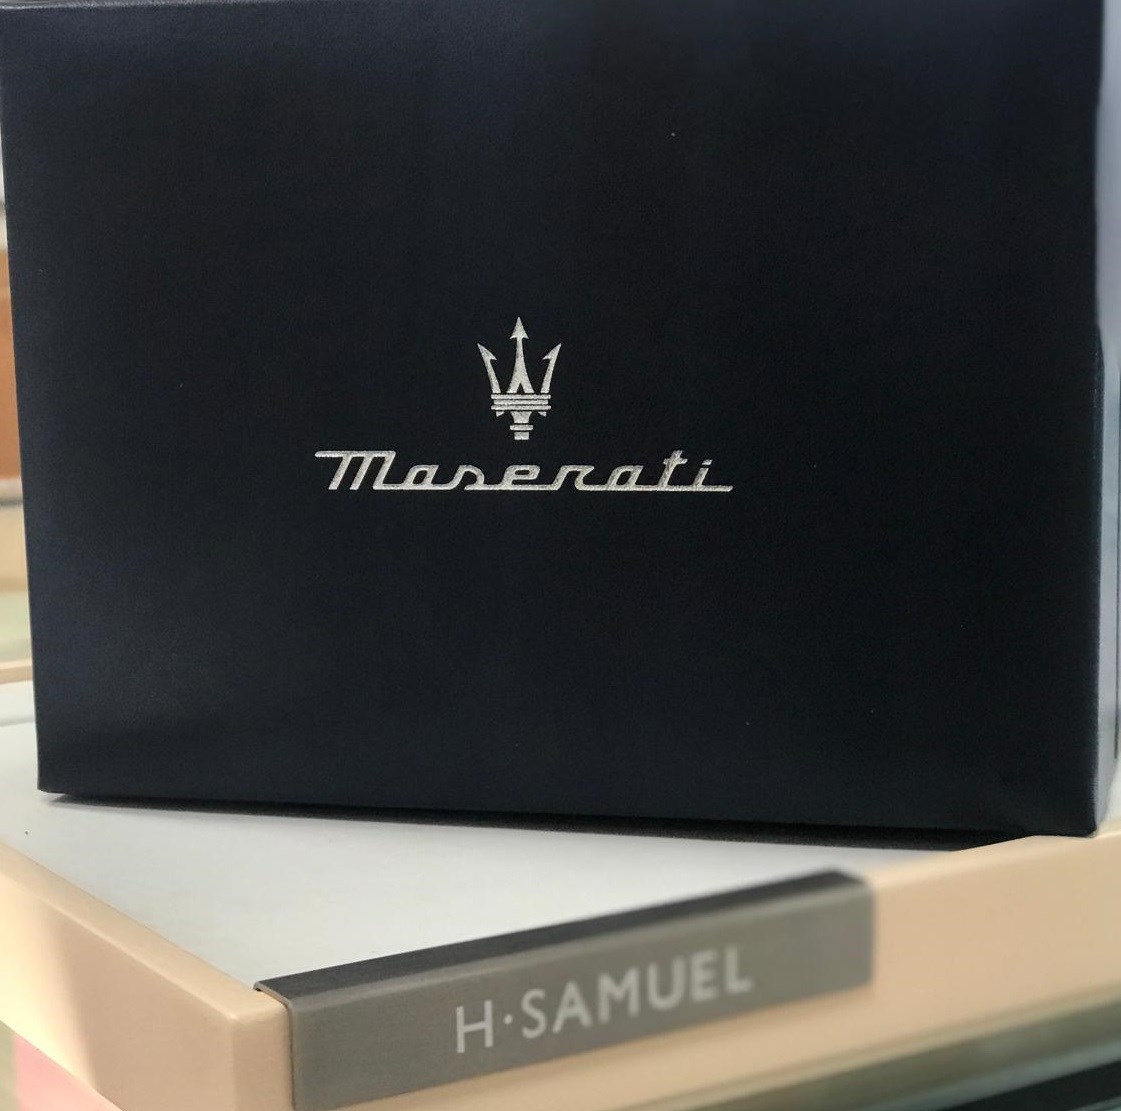 Maserati at H. Samuel